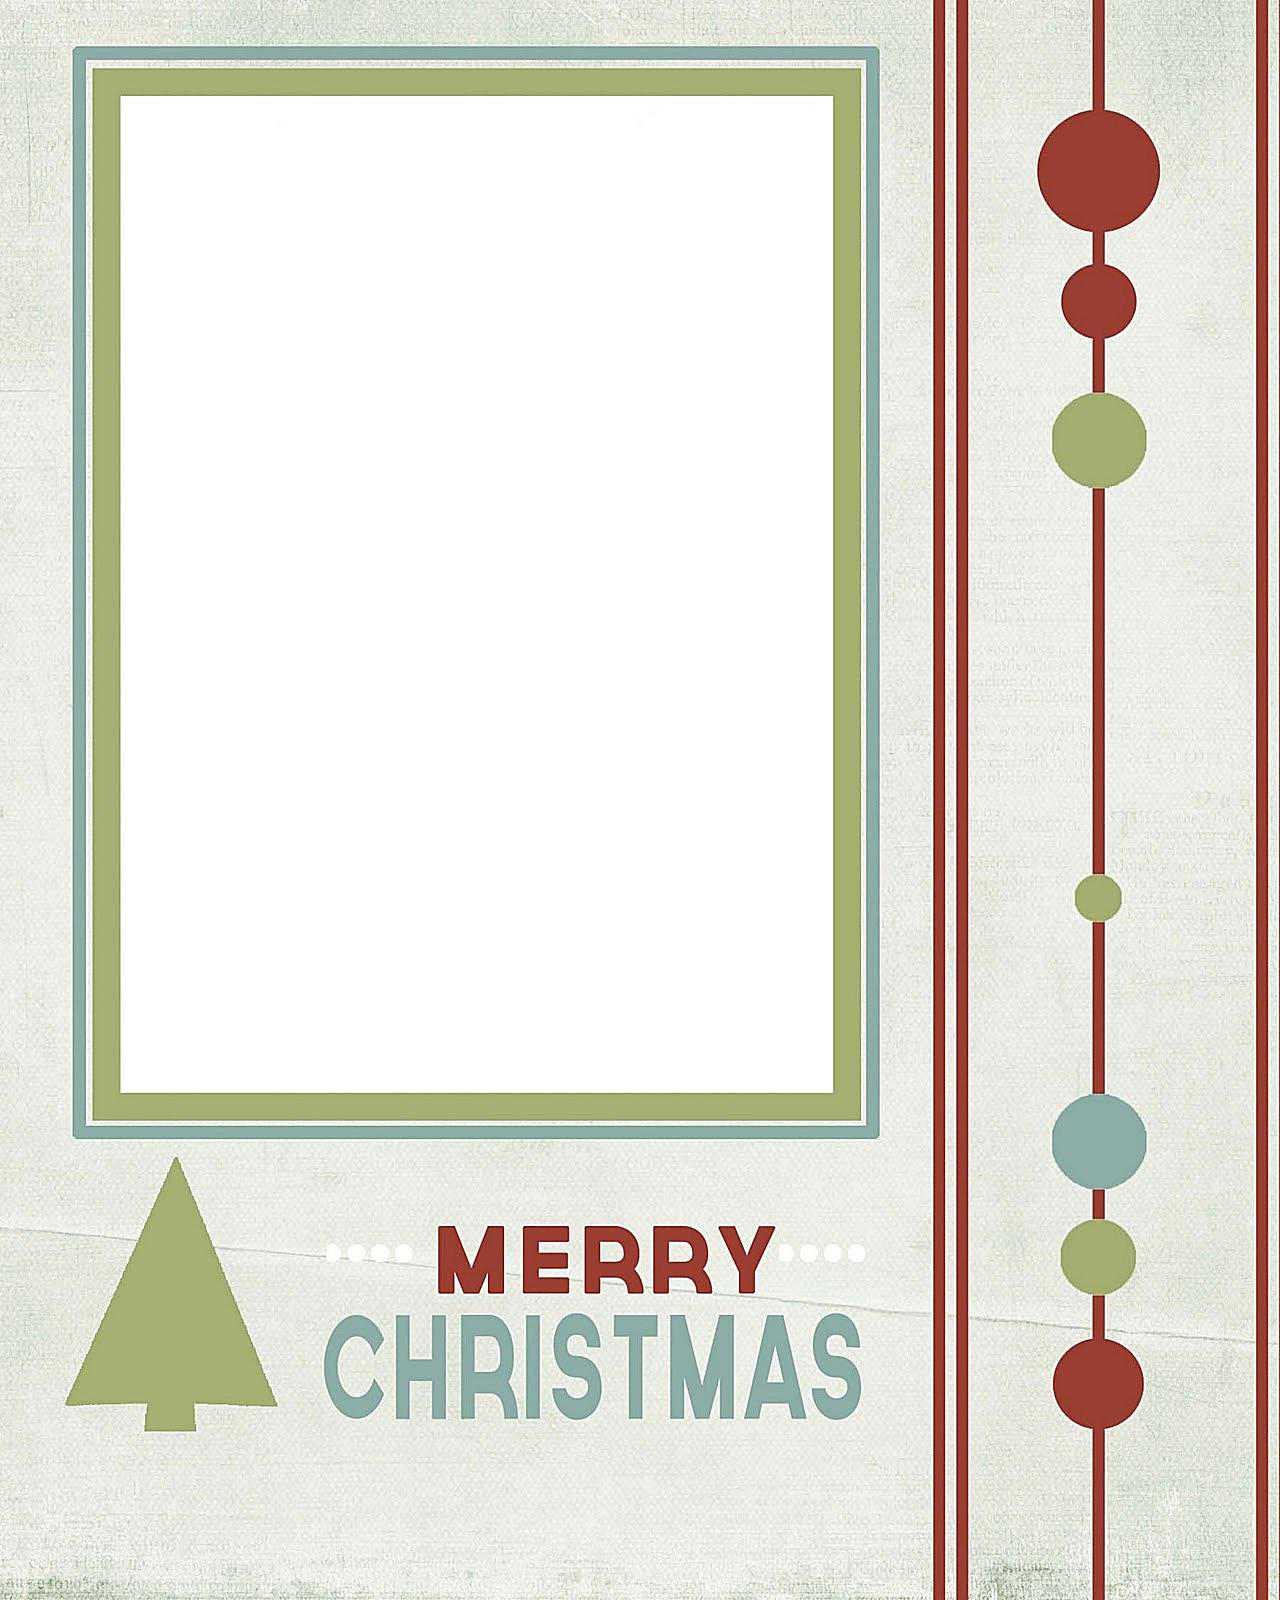 Christmas Card Photo Templates Free – Zimer.bwong.co For Print Your Own Christmas Cards Templates